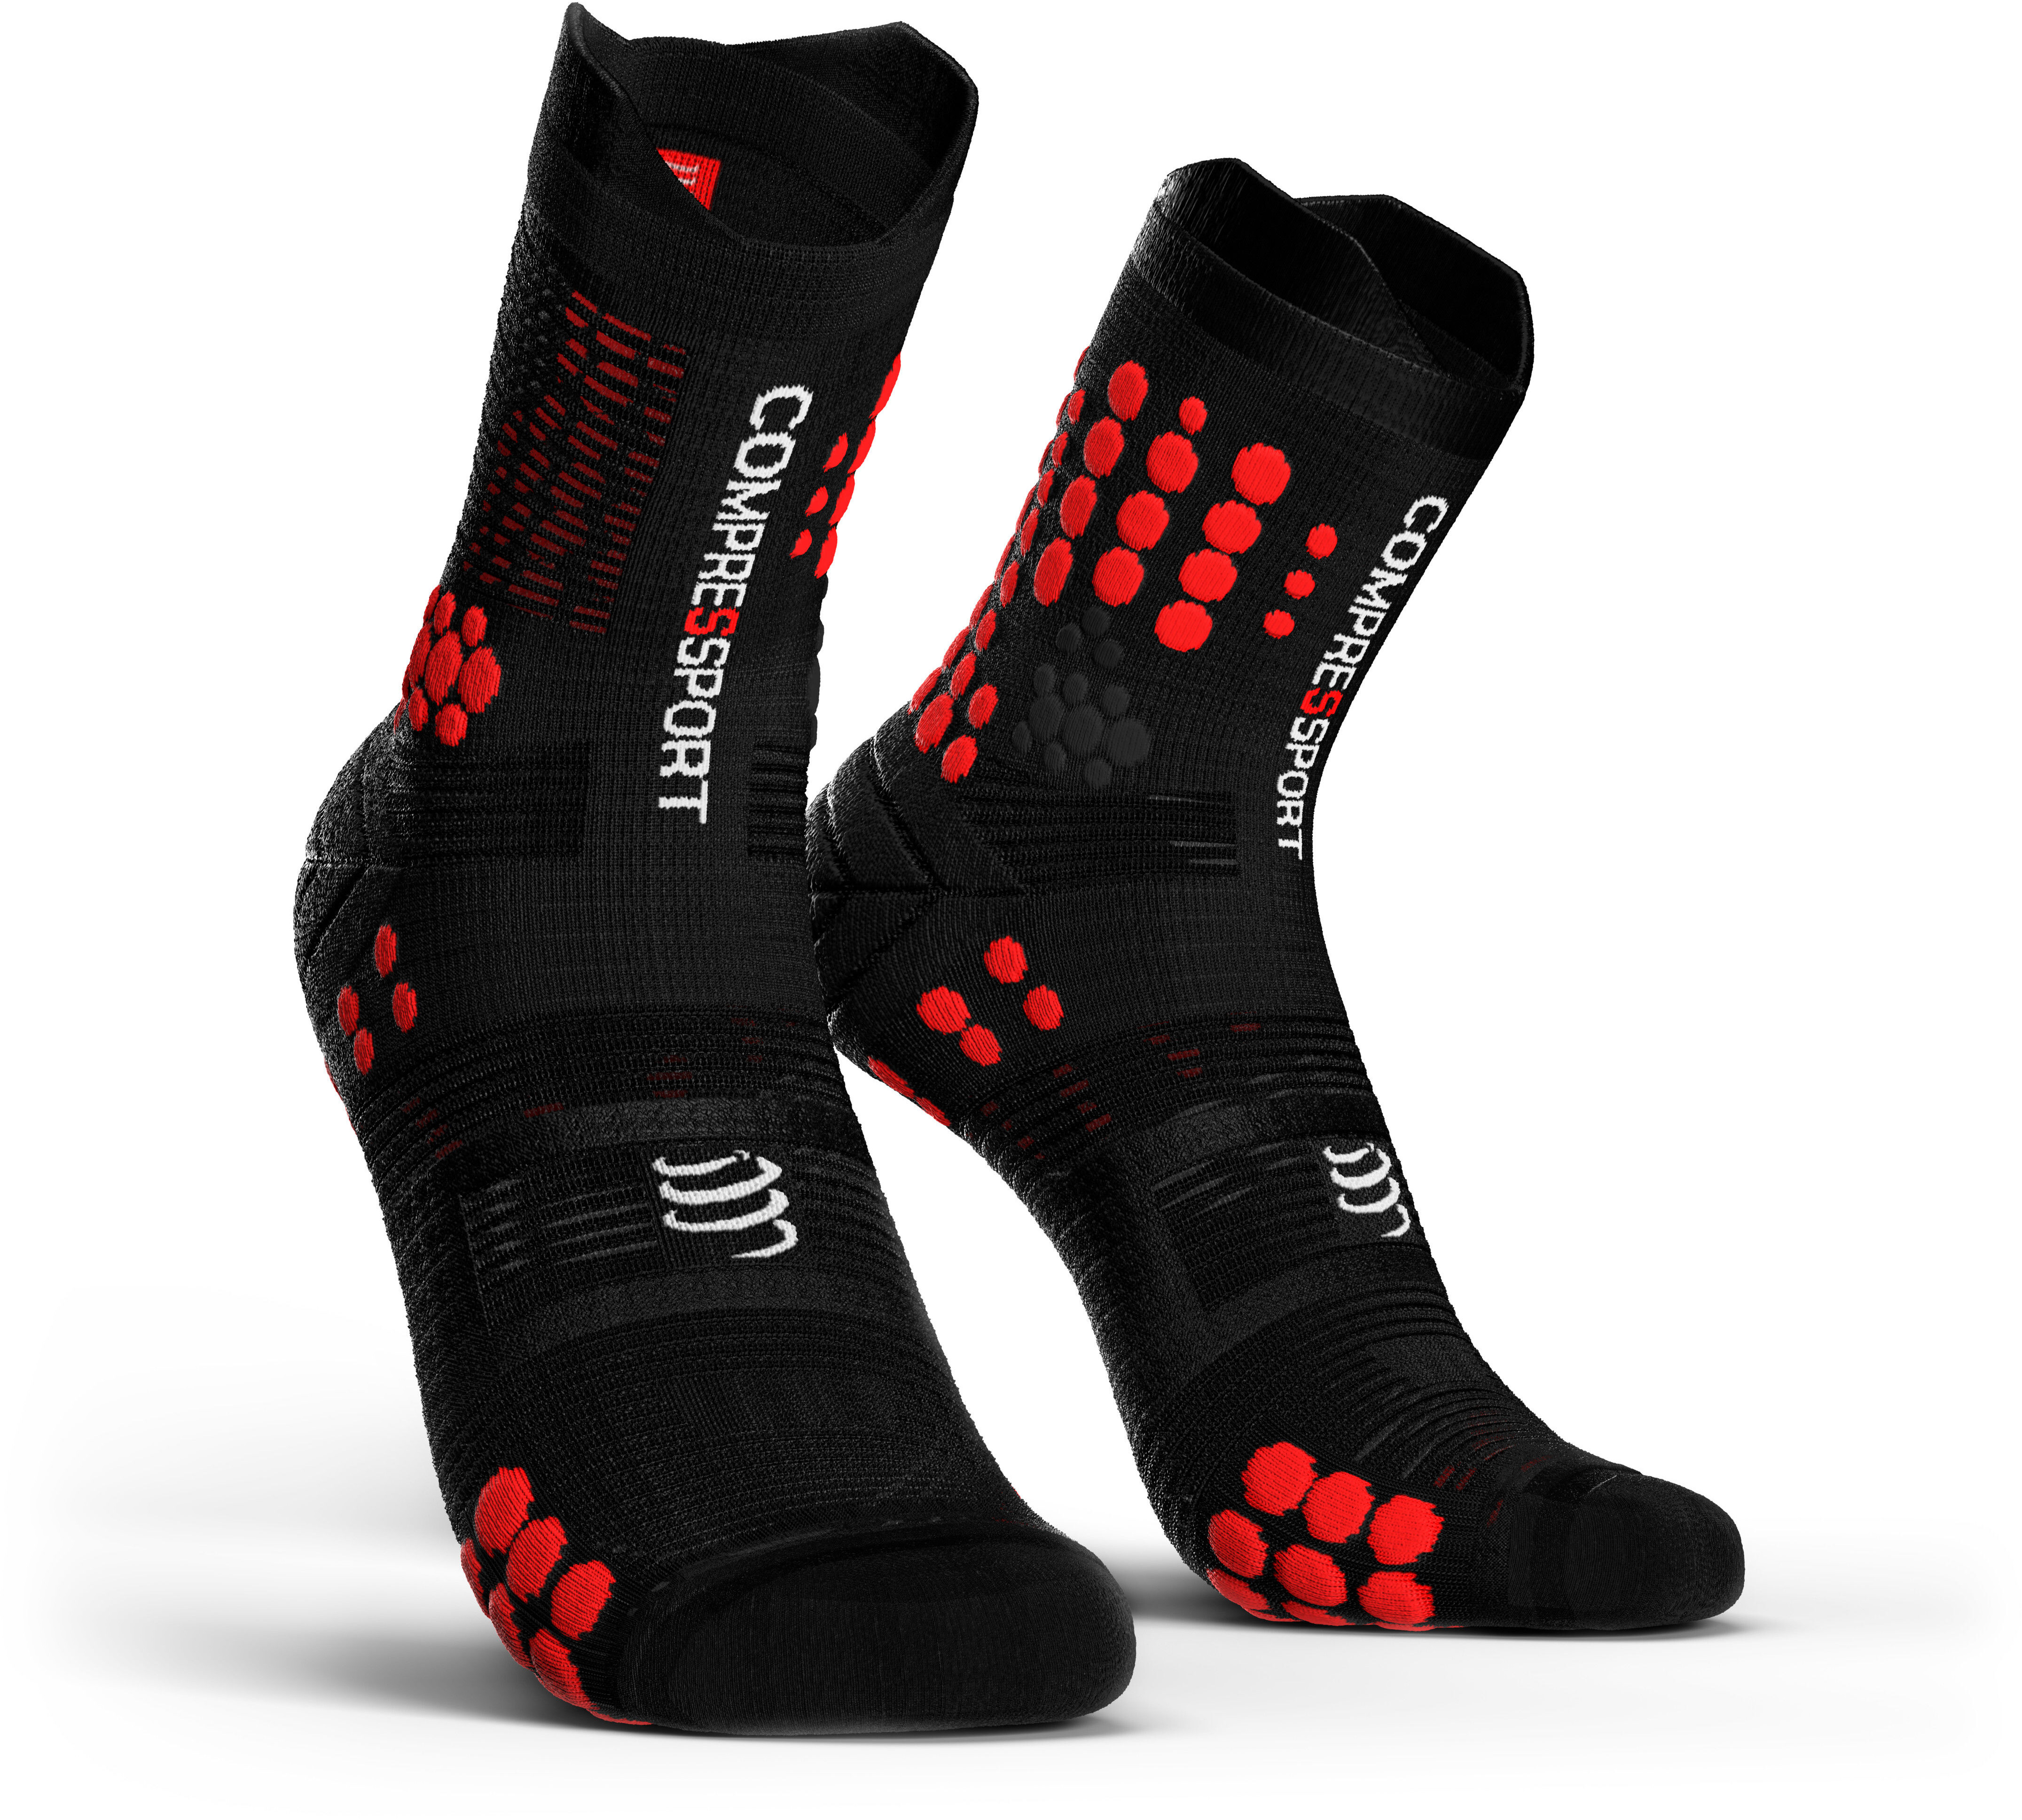 Compressport Pro Racing V3.0 Trail Socks black/red at addnature.co.uk